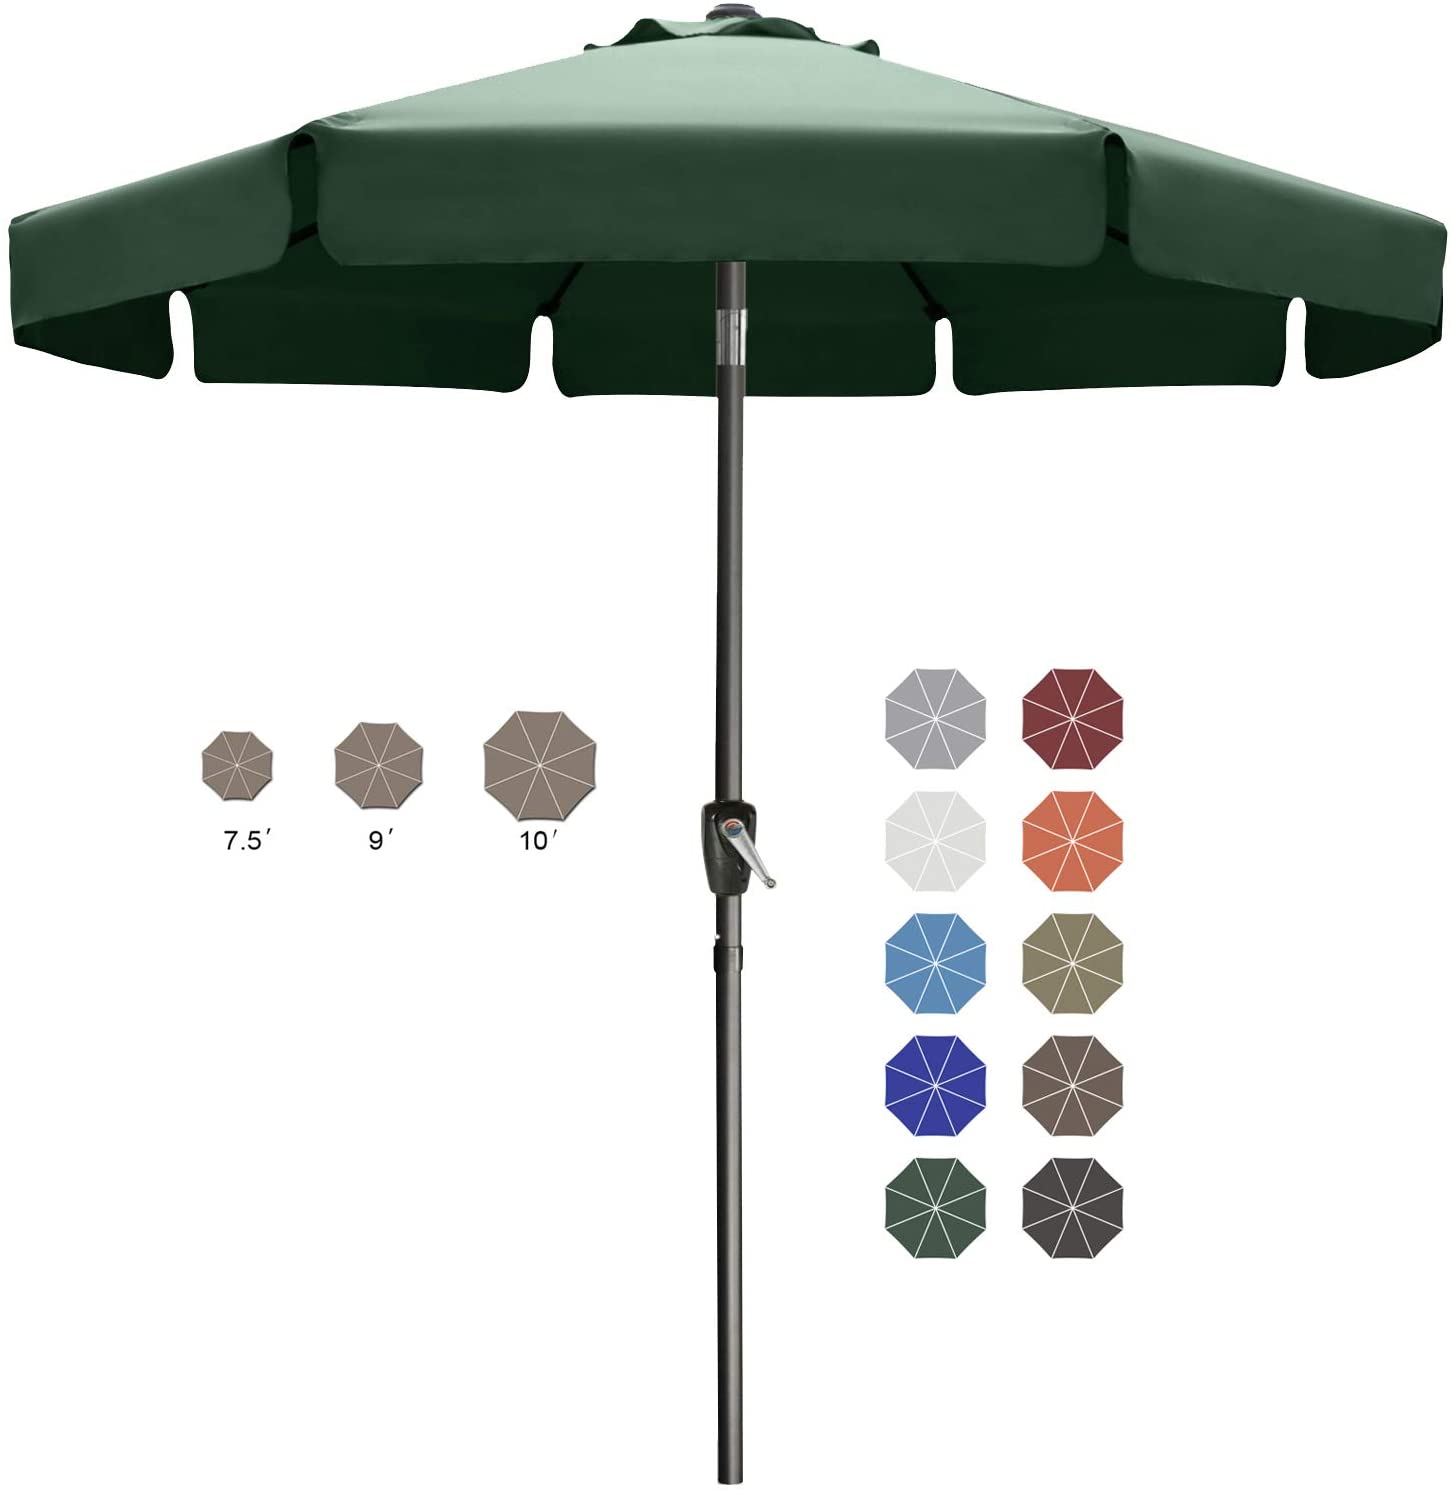 Table Market Umbrella Patio Umbrella - ABC-CANOPY